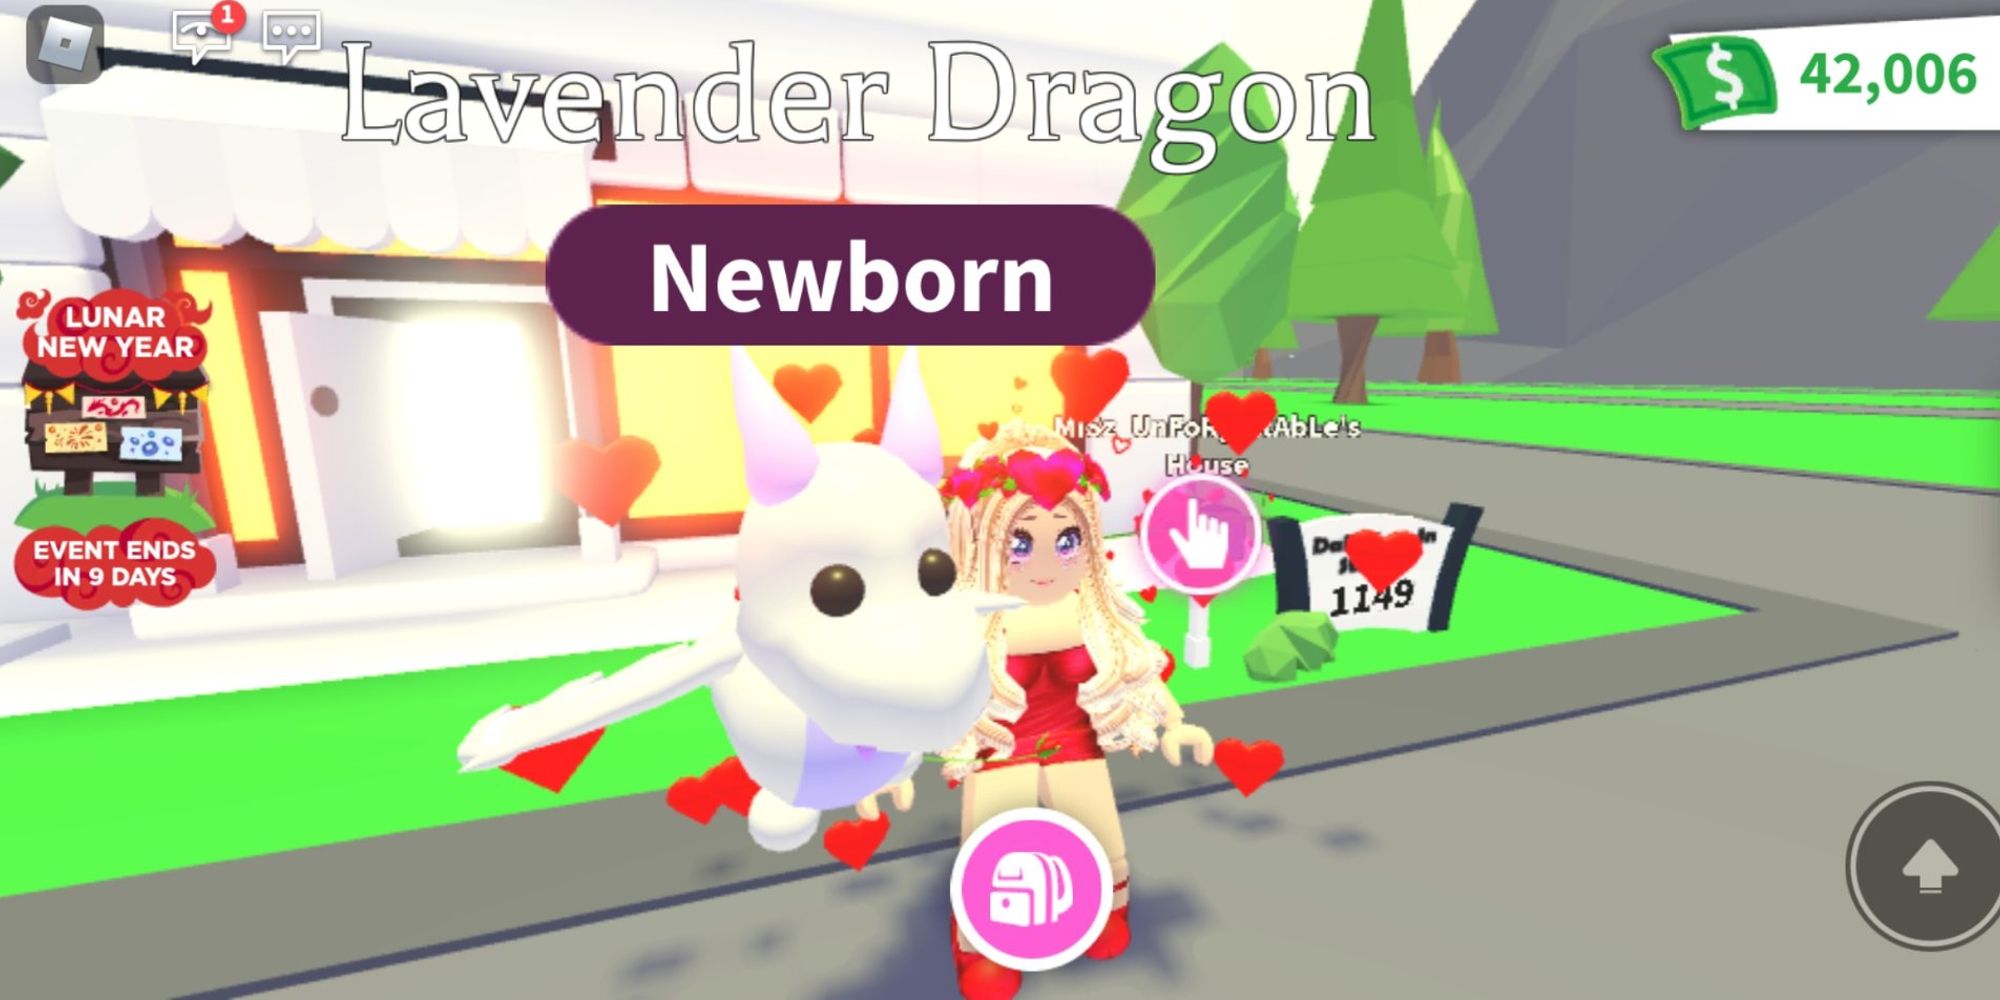 player and lavender dragon newborn standing in neighborhood